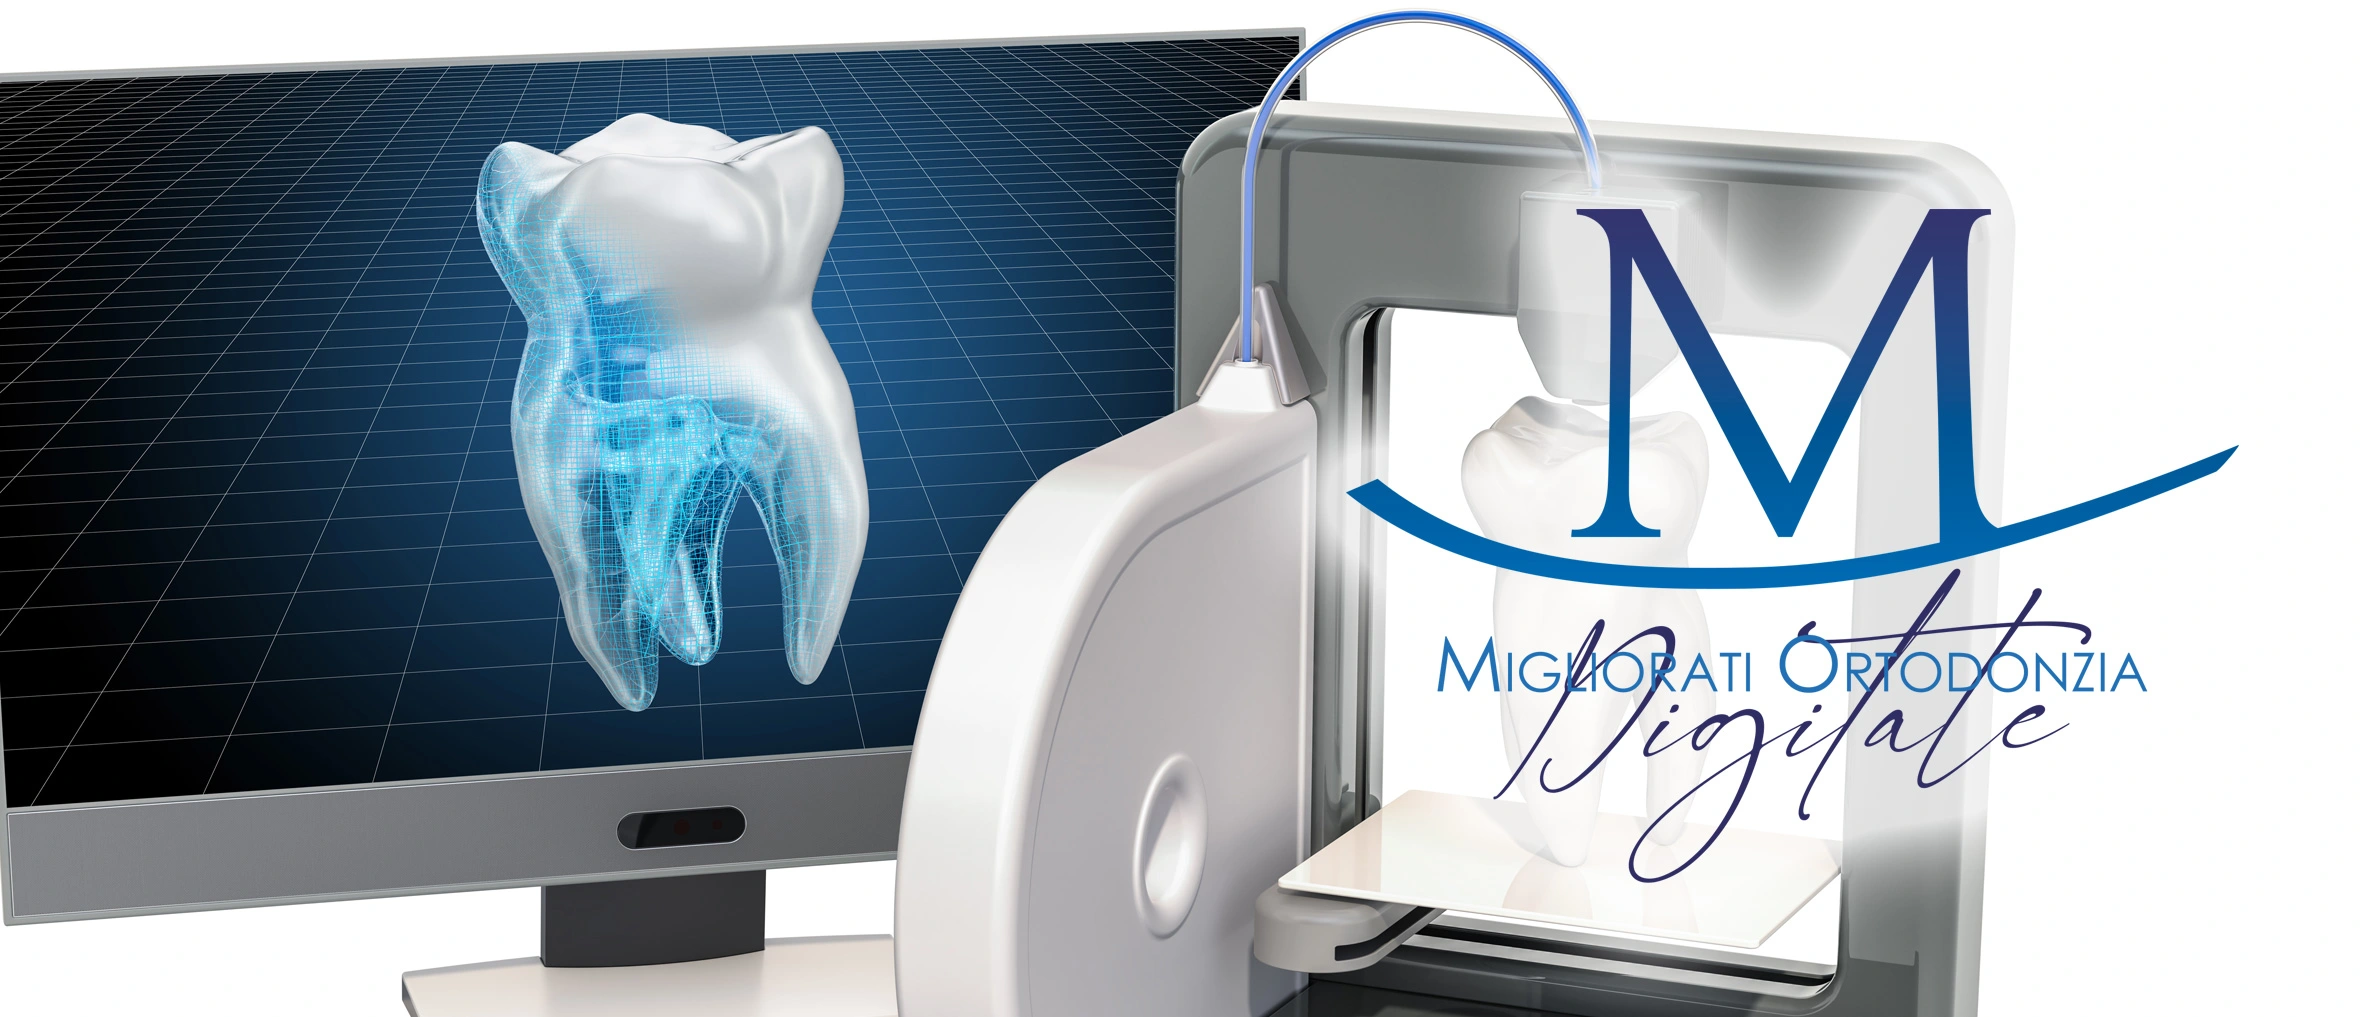 Ortodonzia Digitale